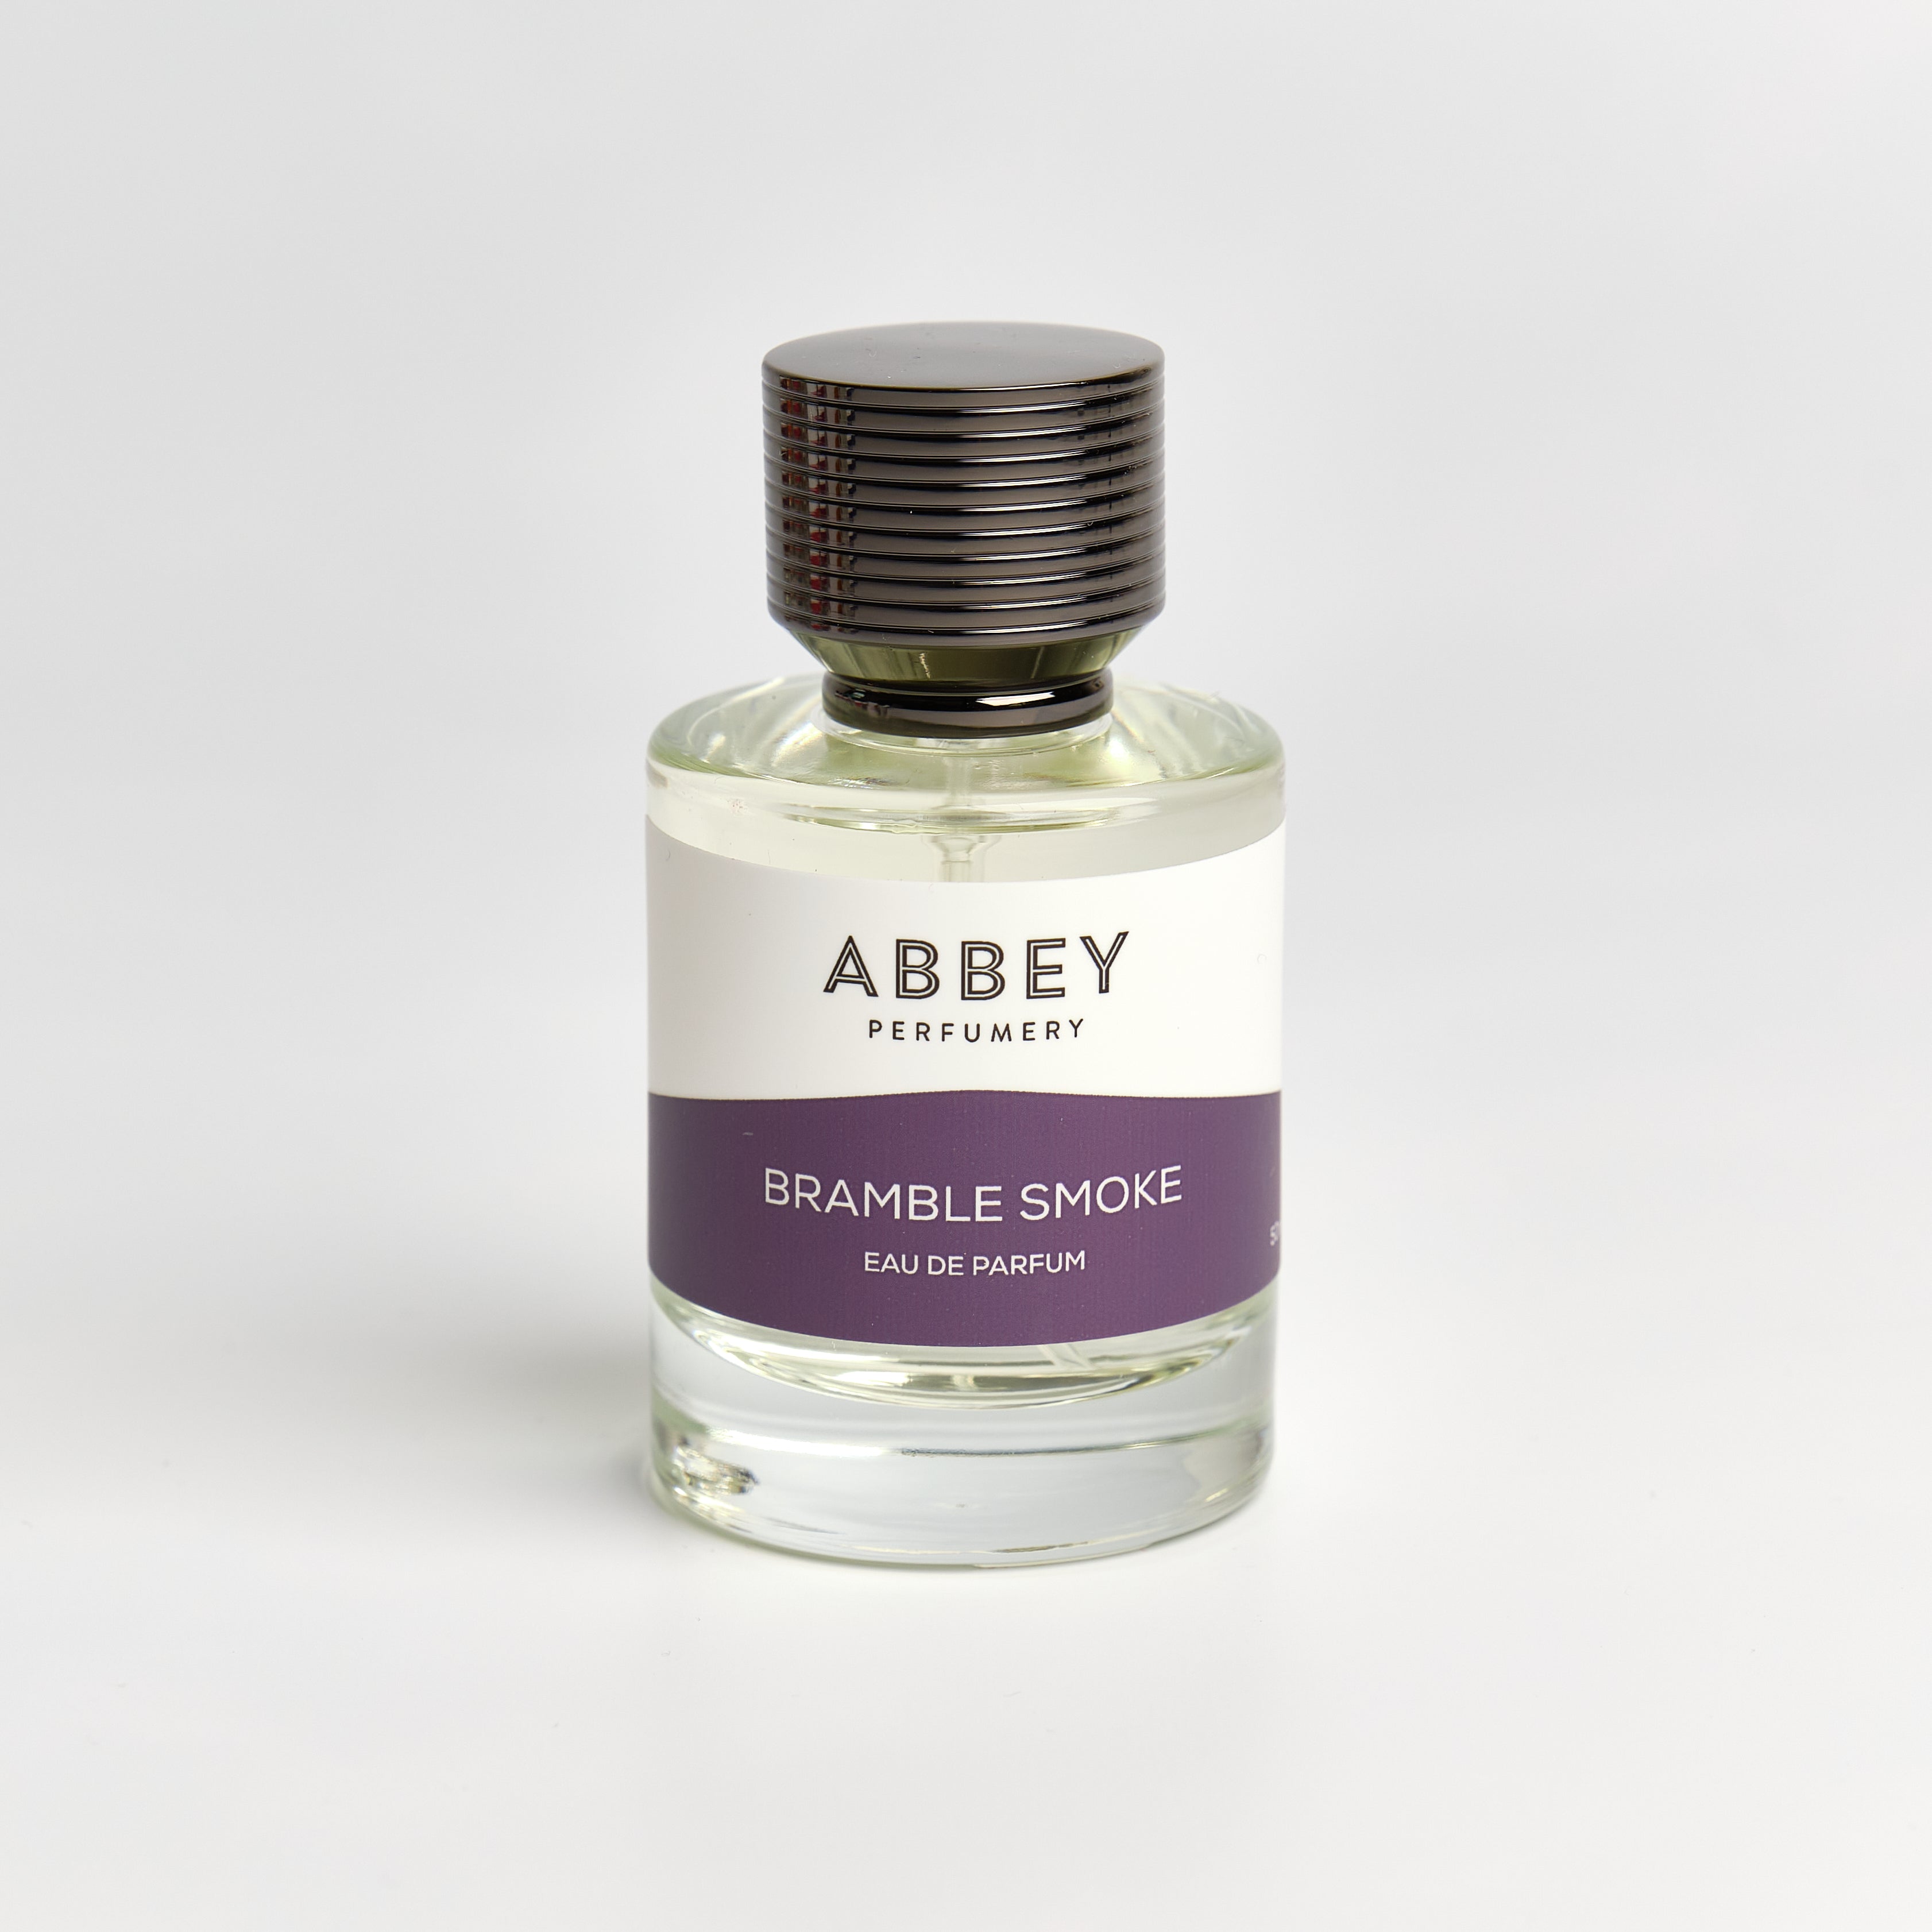 Bramble Smoke perfume bottle 50ml on white background